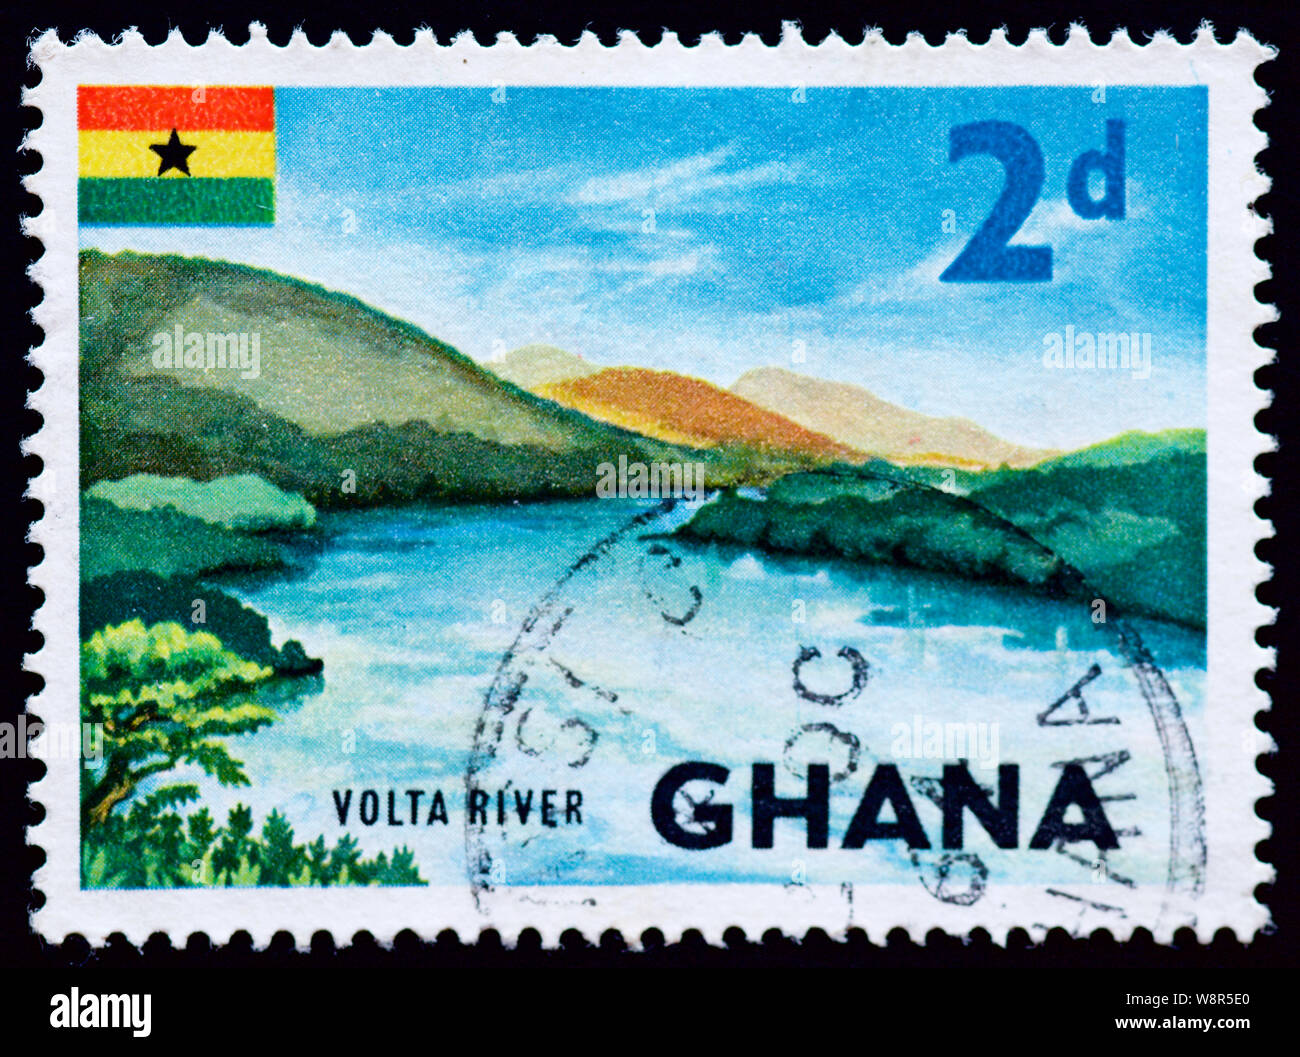 Ghana Postage Stamp - Volta River Stock Photo